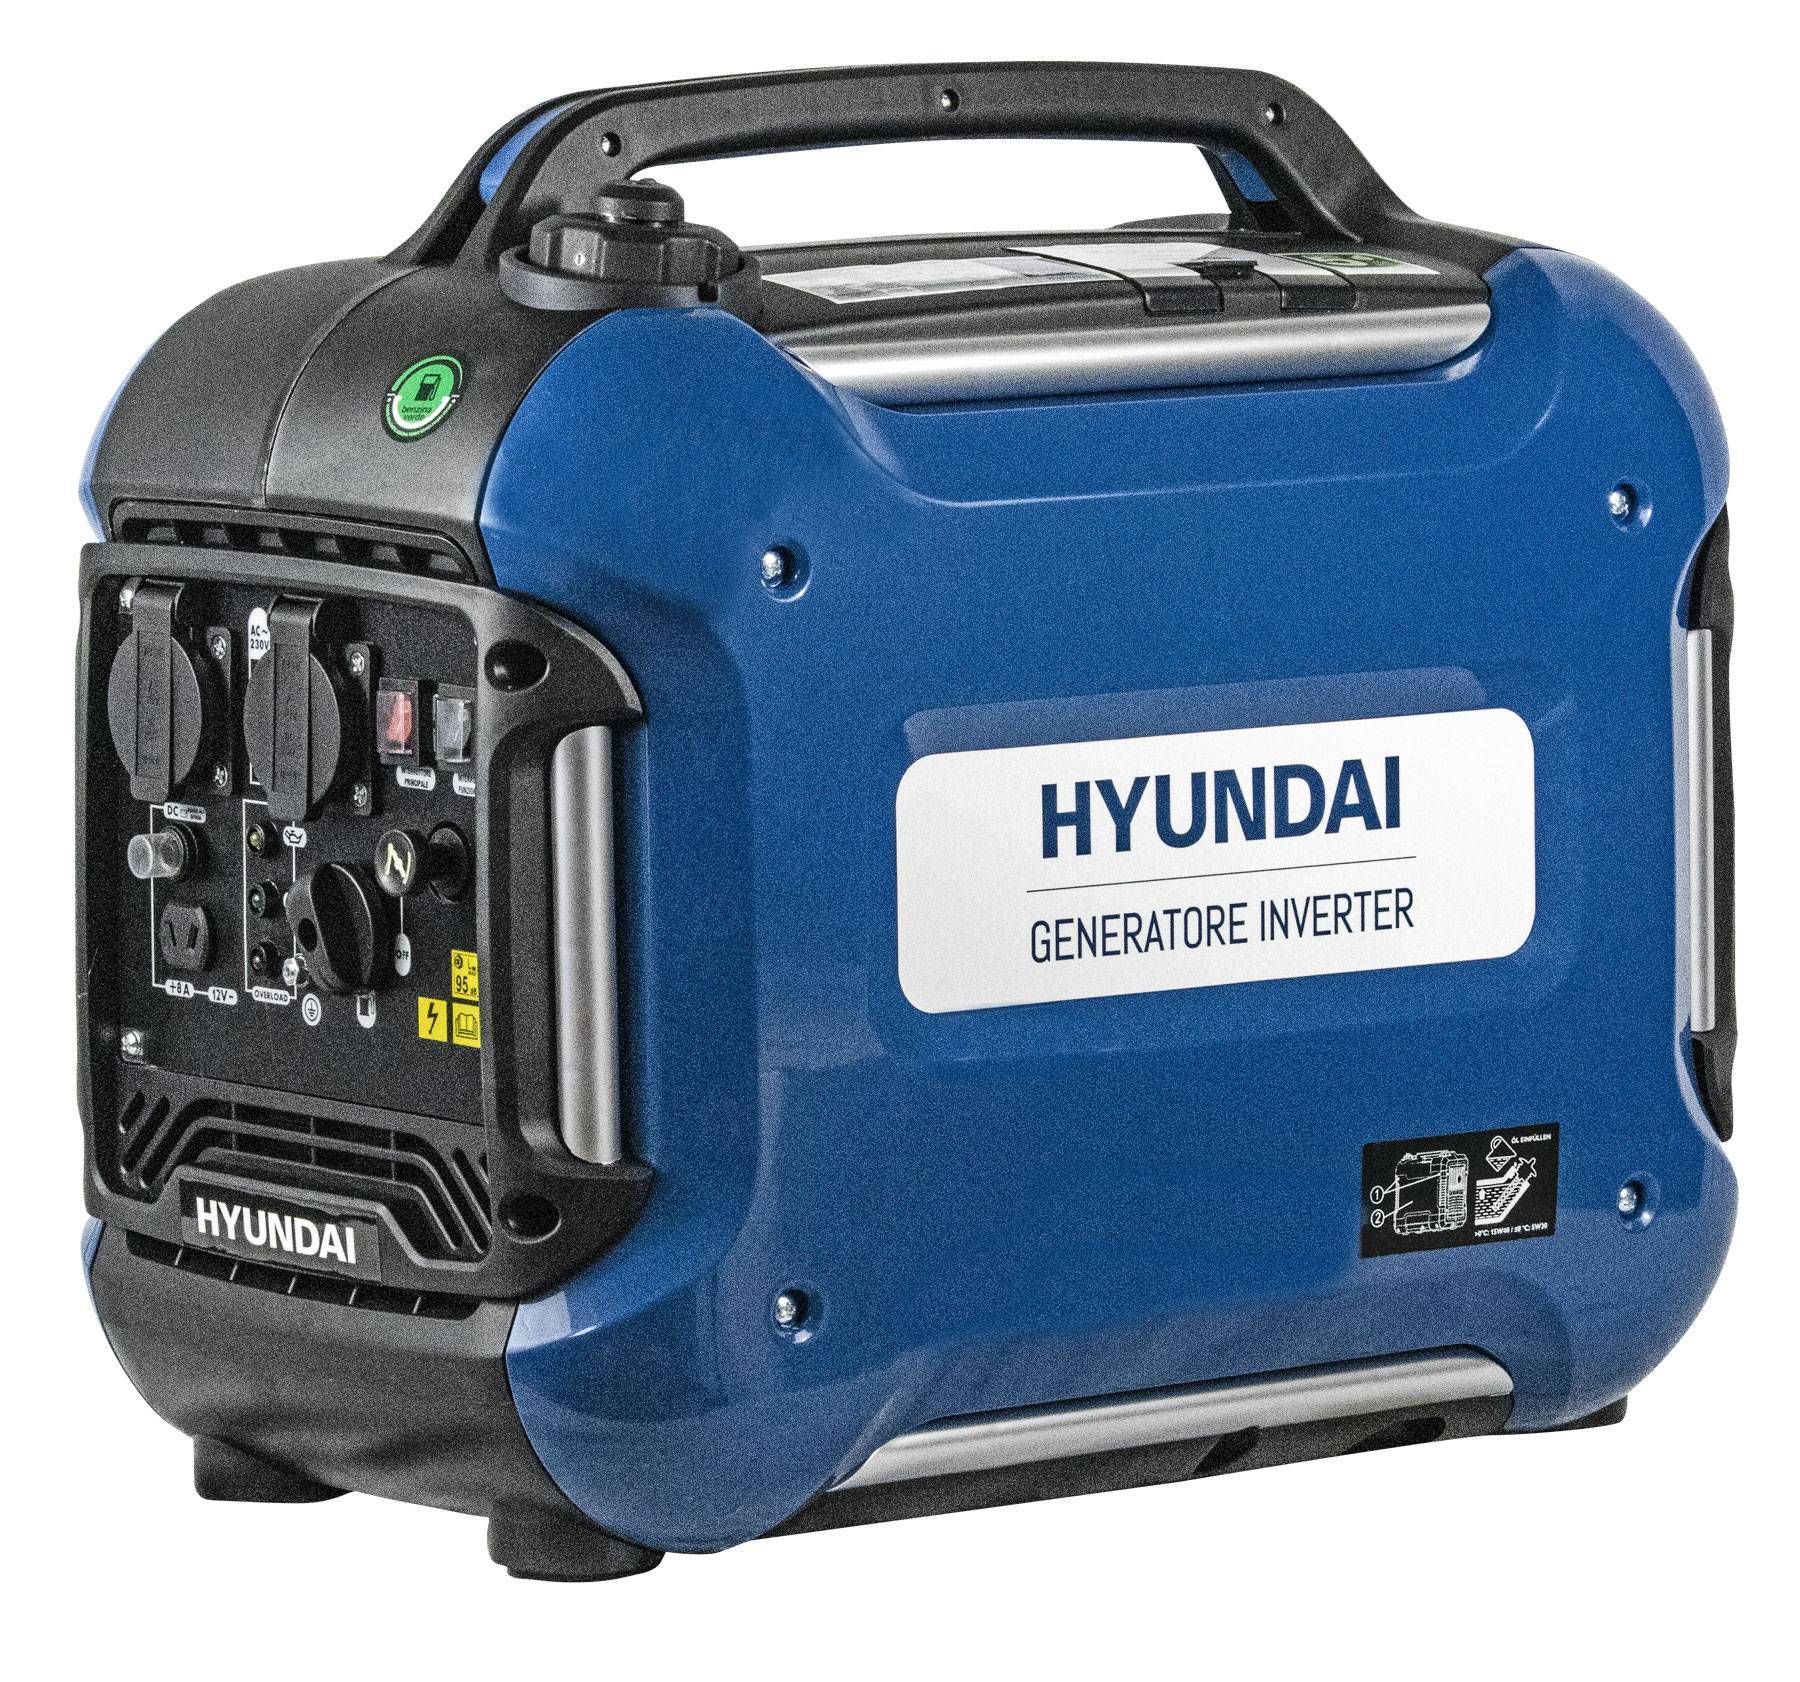 Generatore inverter Hyundai a benzina portatile – 1,9 kw 4 tempi